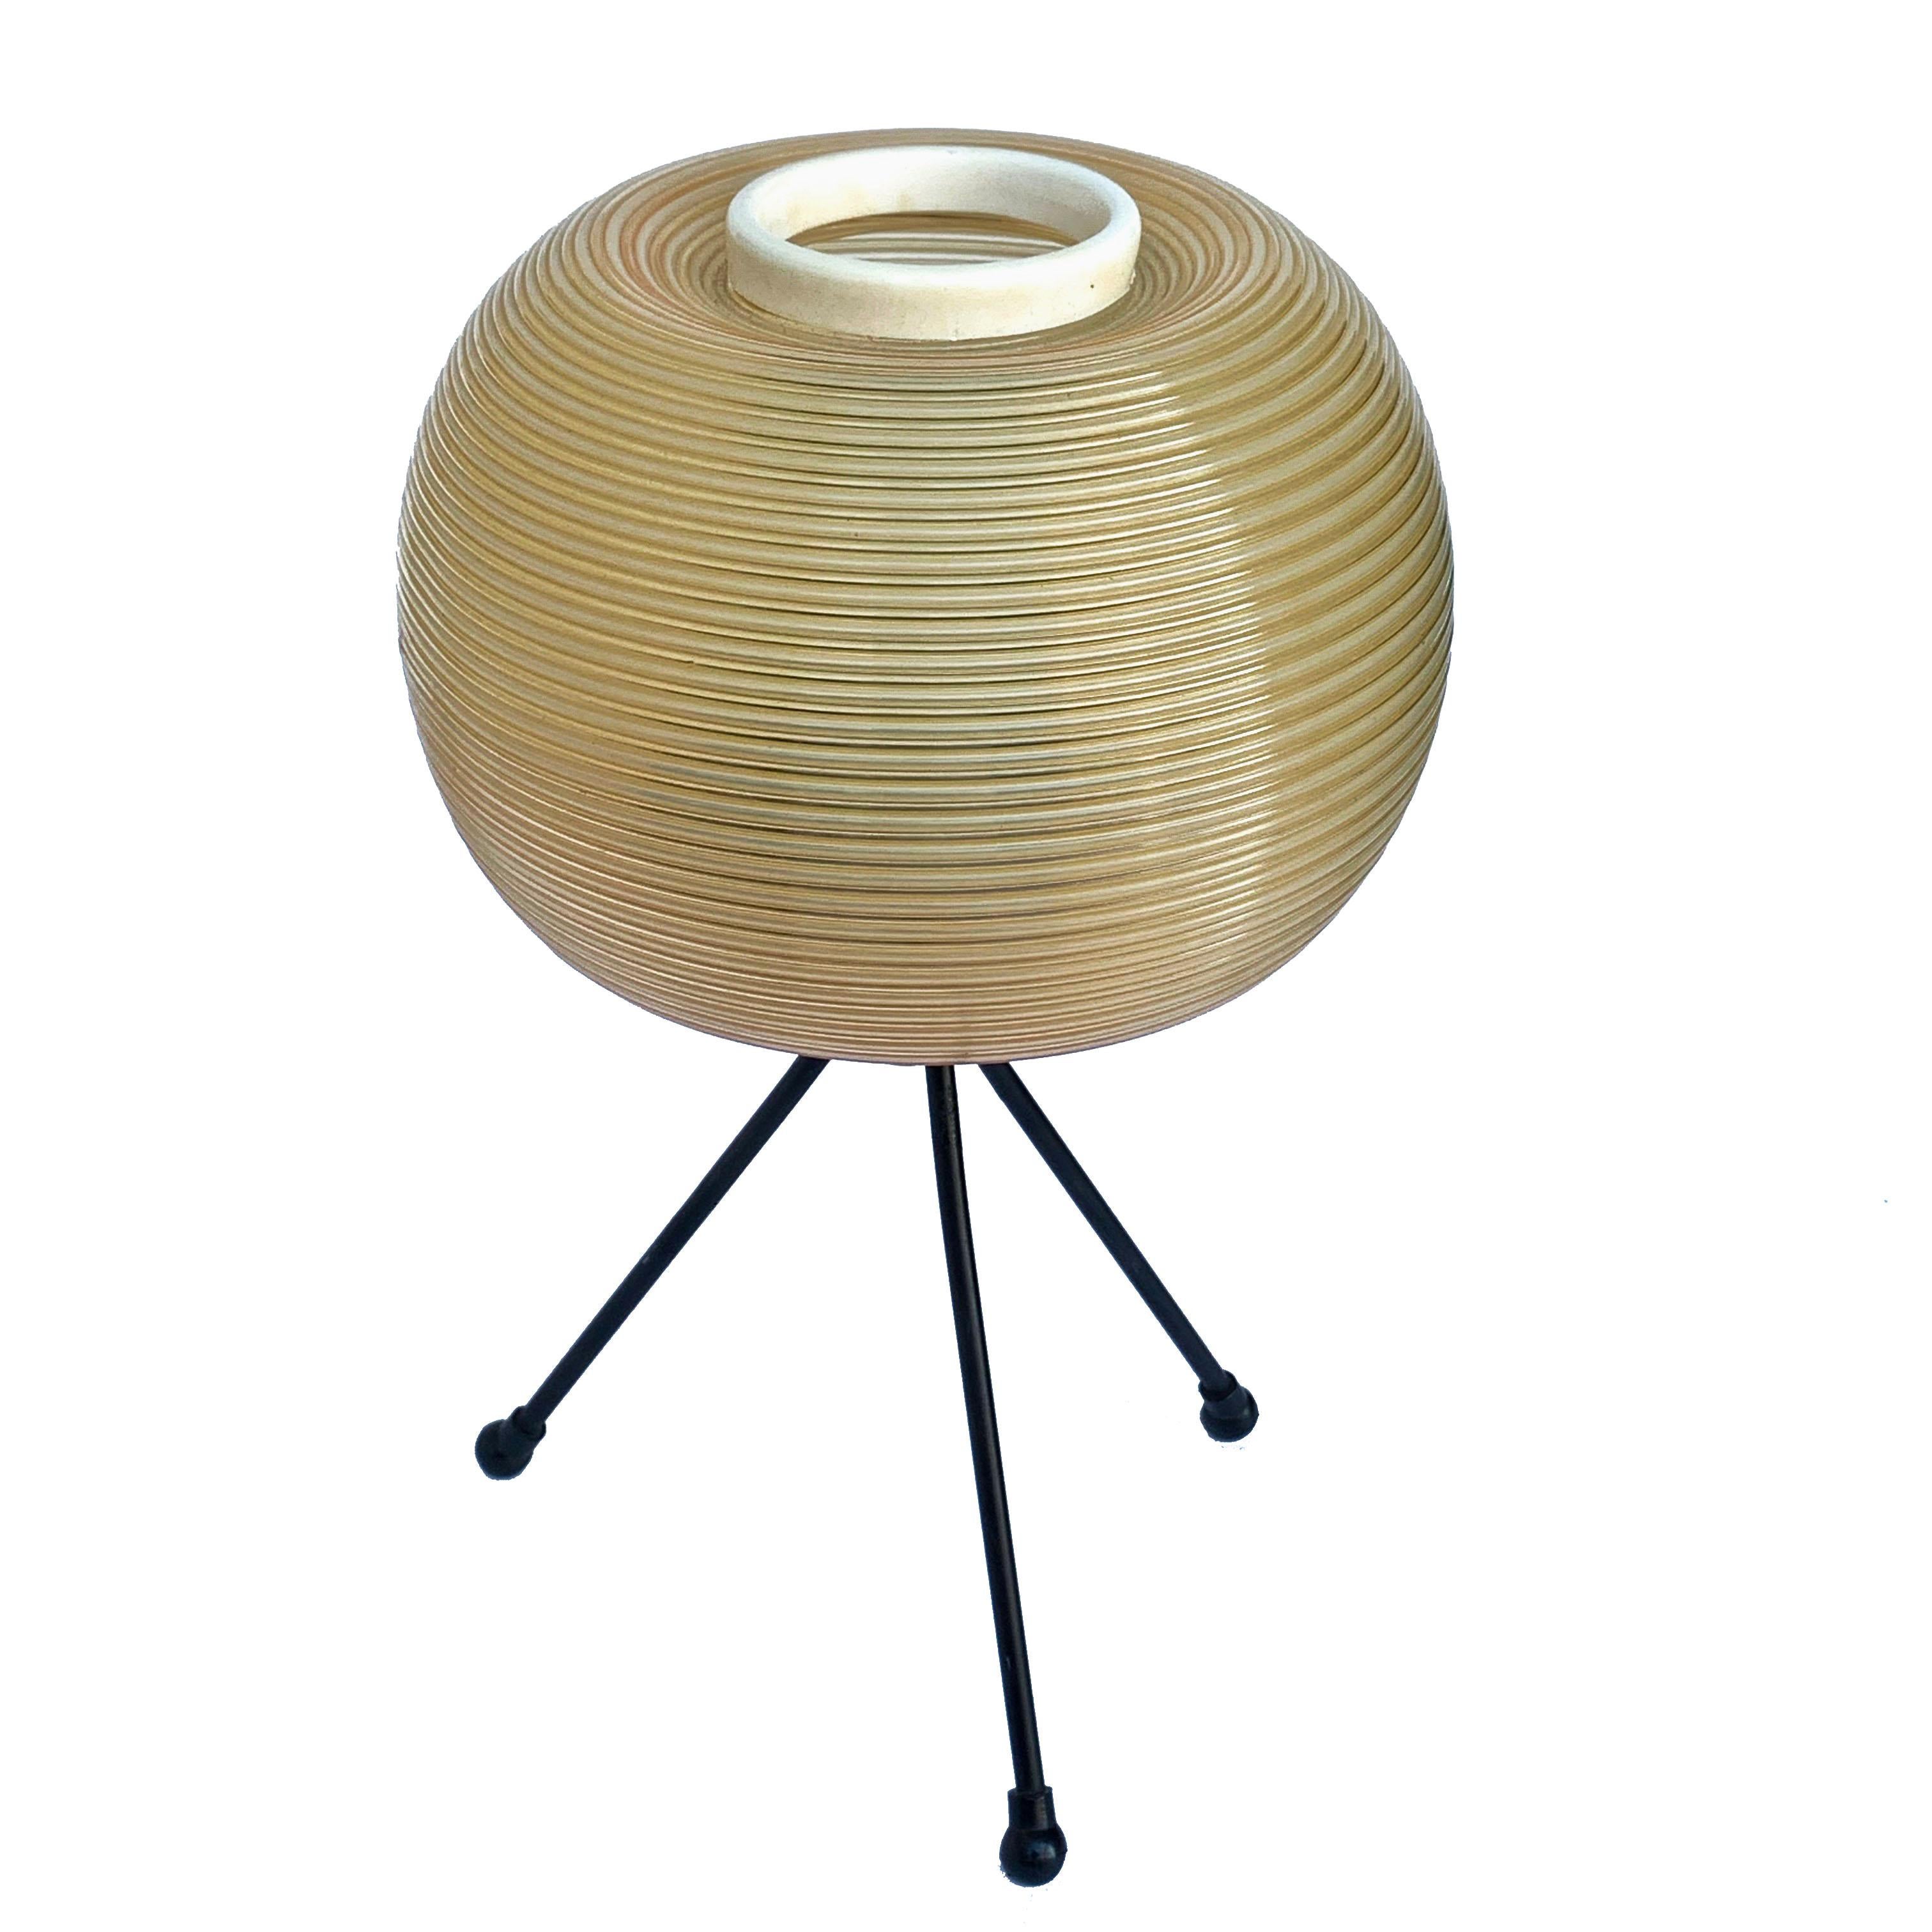 Rotaflex Table Lamp, Disderot ARP Guariche Mortar Motte Design 1950s Table Lamp